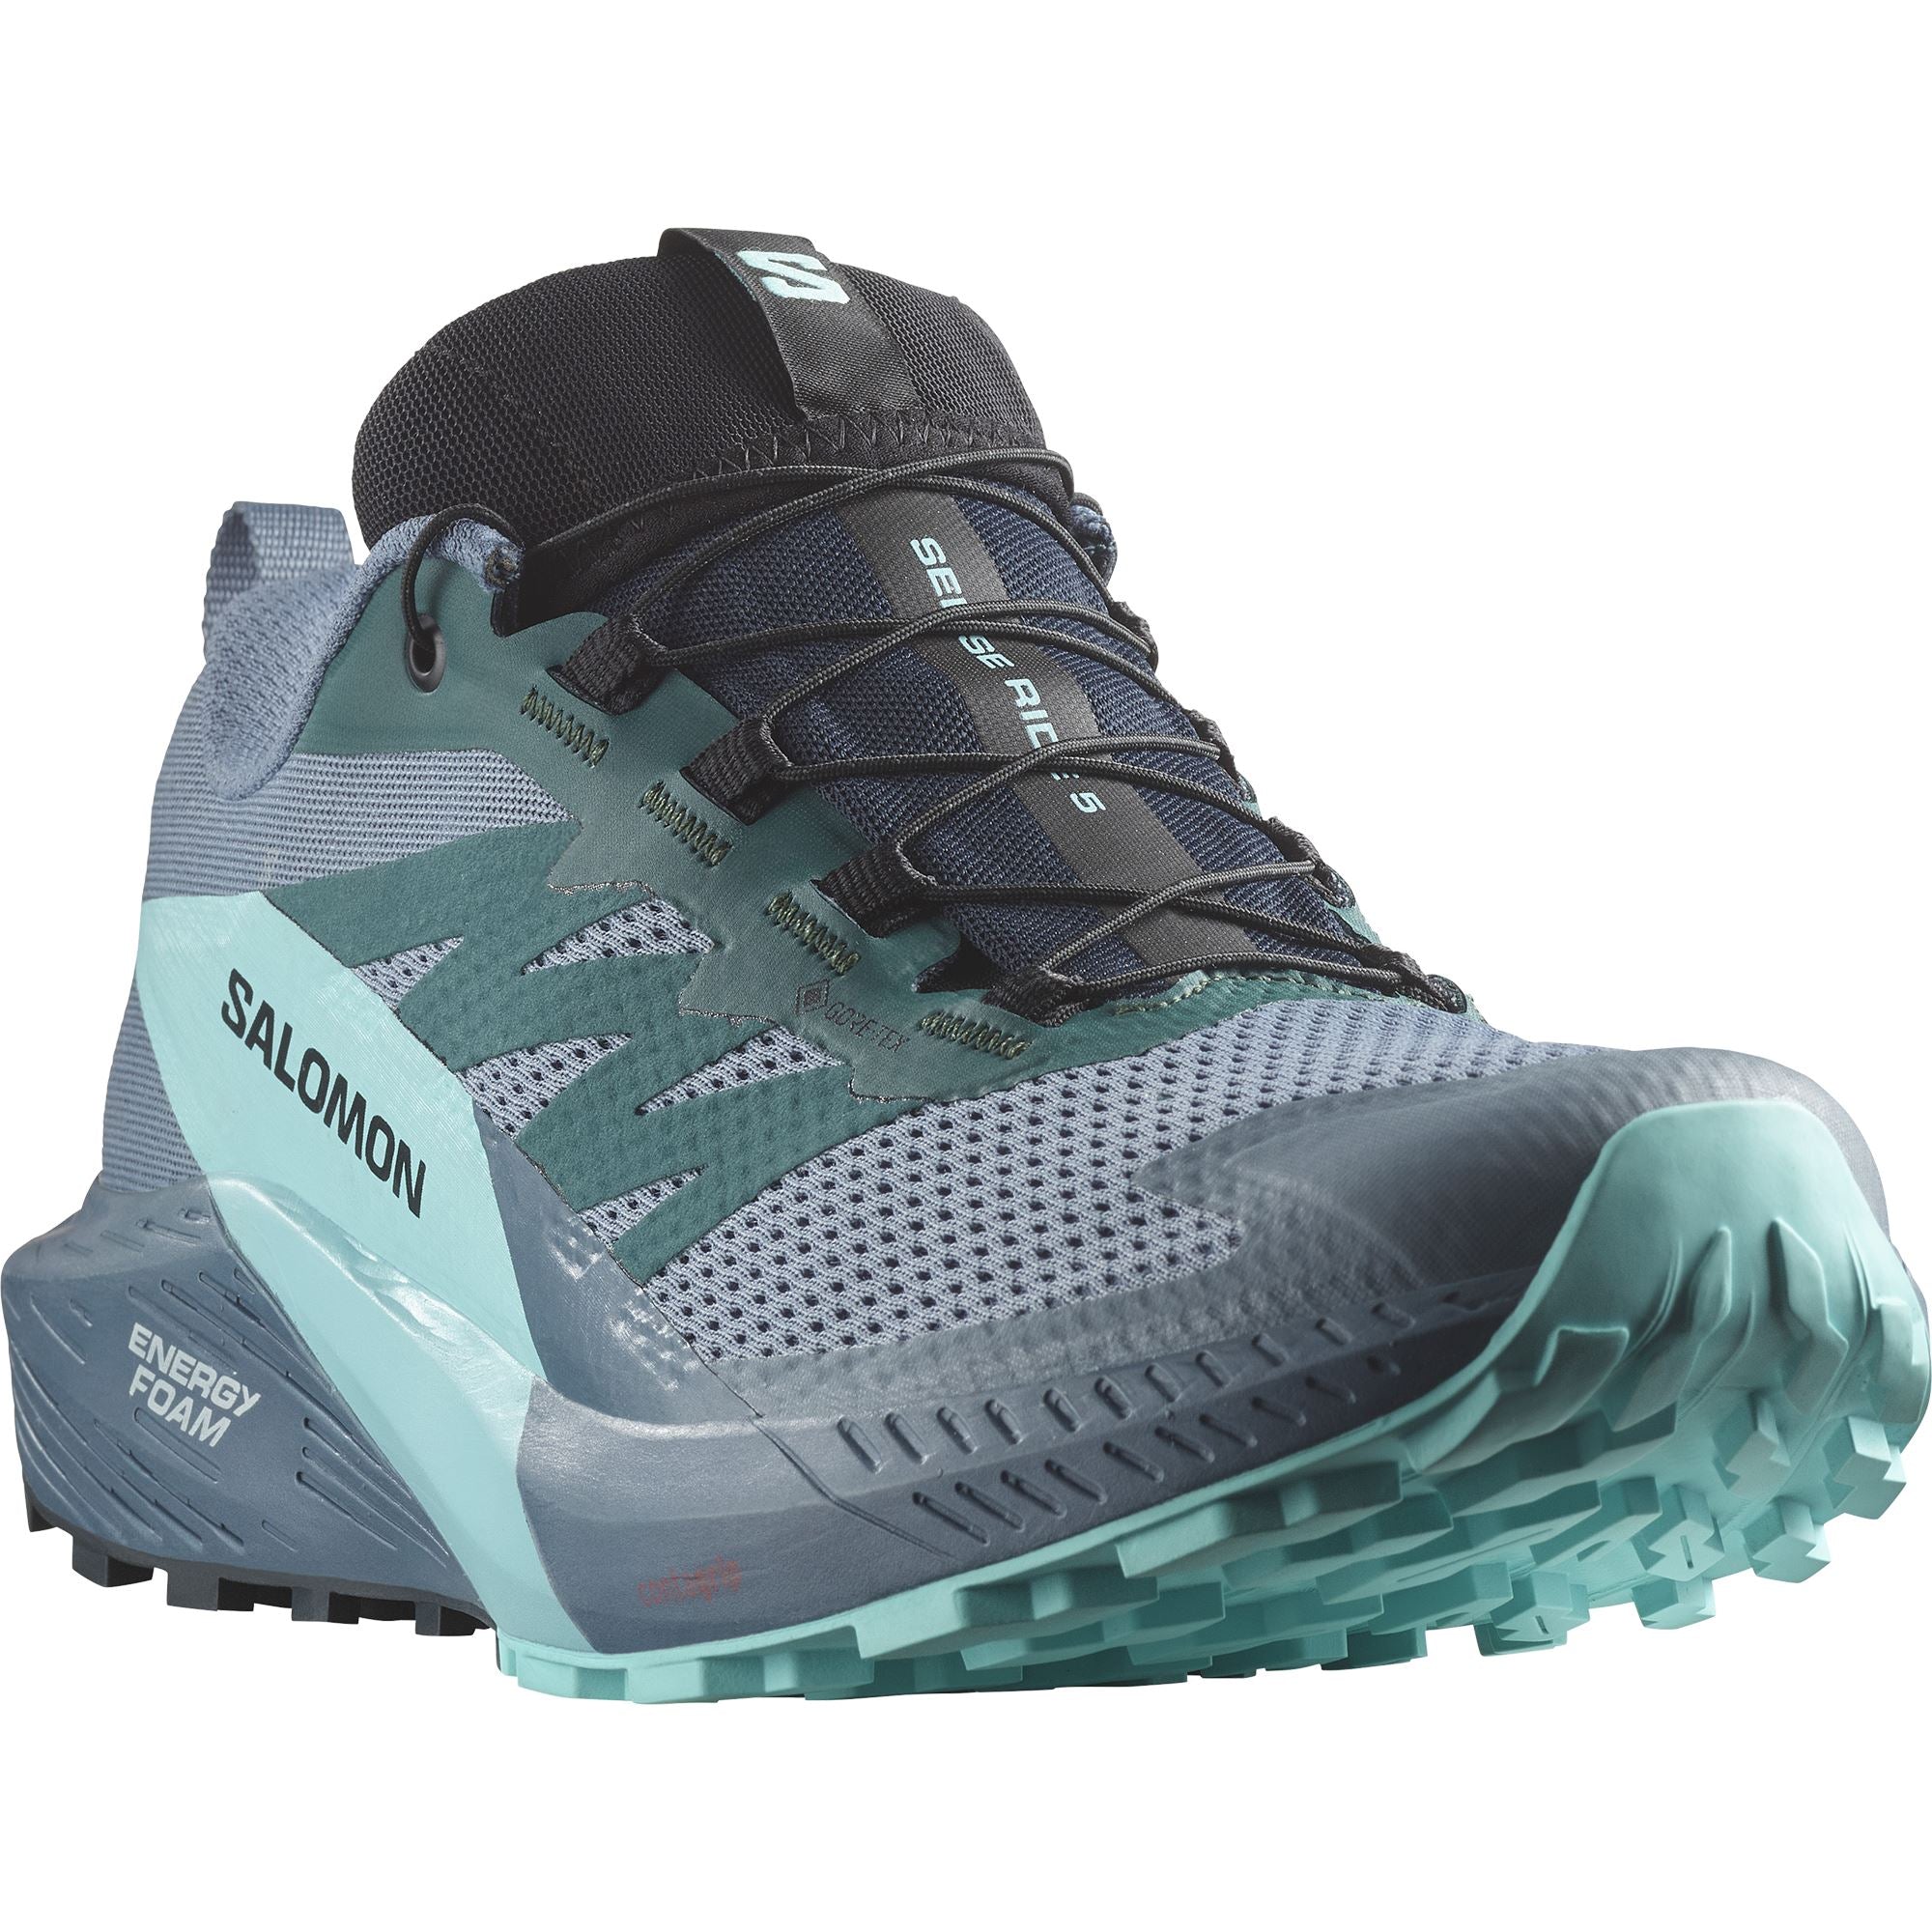 Salomon Sense Ride 5 GTX Men's Trail Running Shoes Carbon / Blue Radiance / China Blue US 8.5 